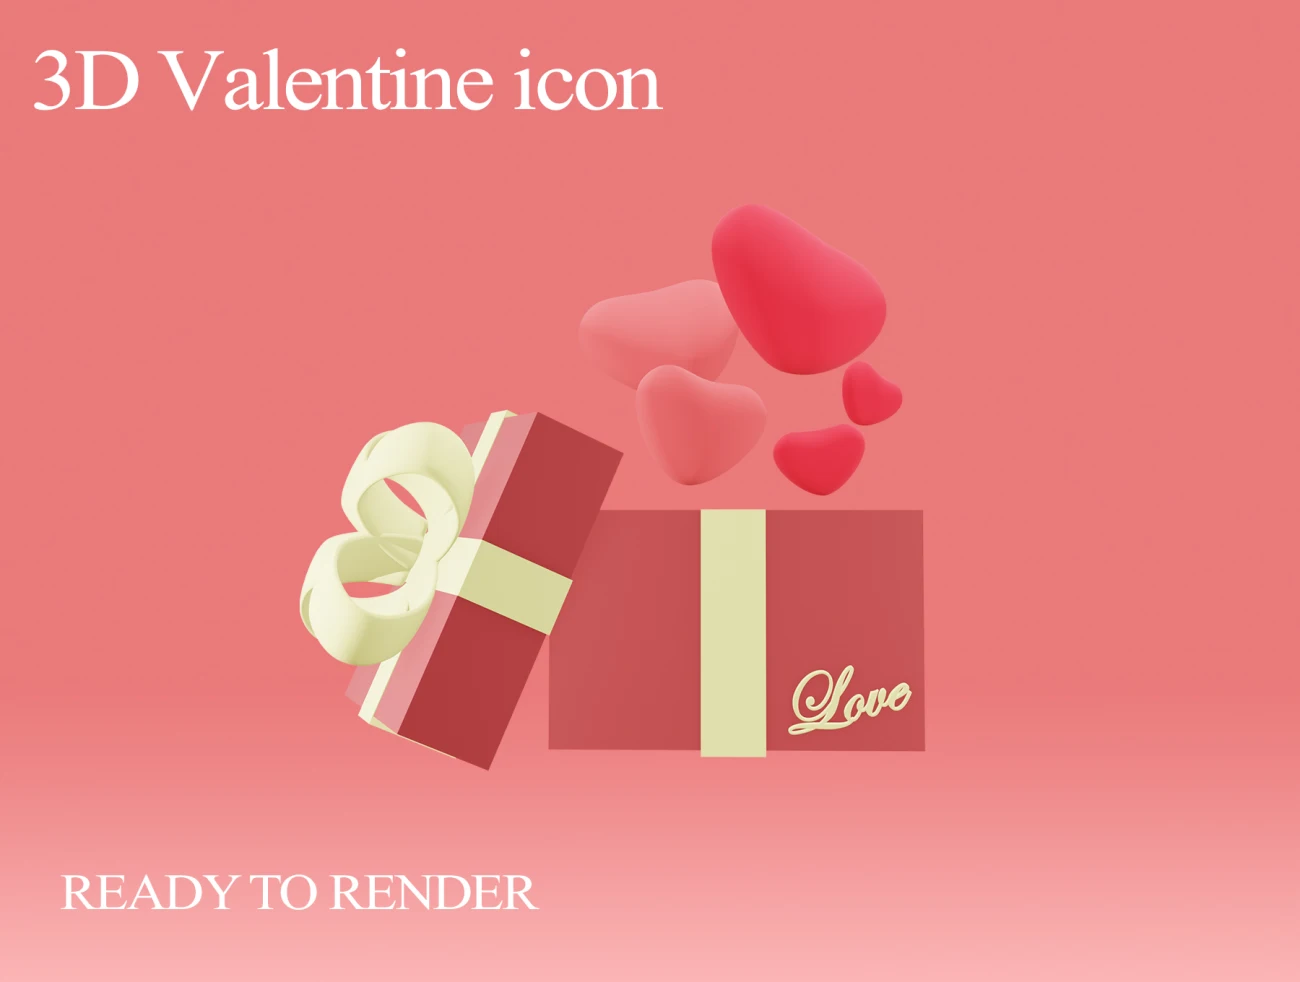 3D情人节图标素材下载 3D Valentine Icon .blender .png插图9